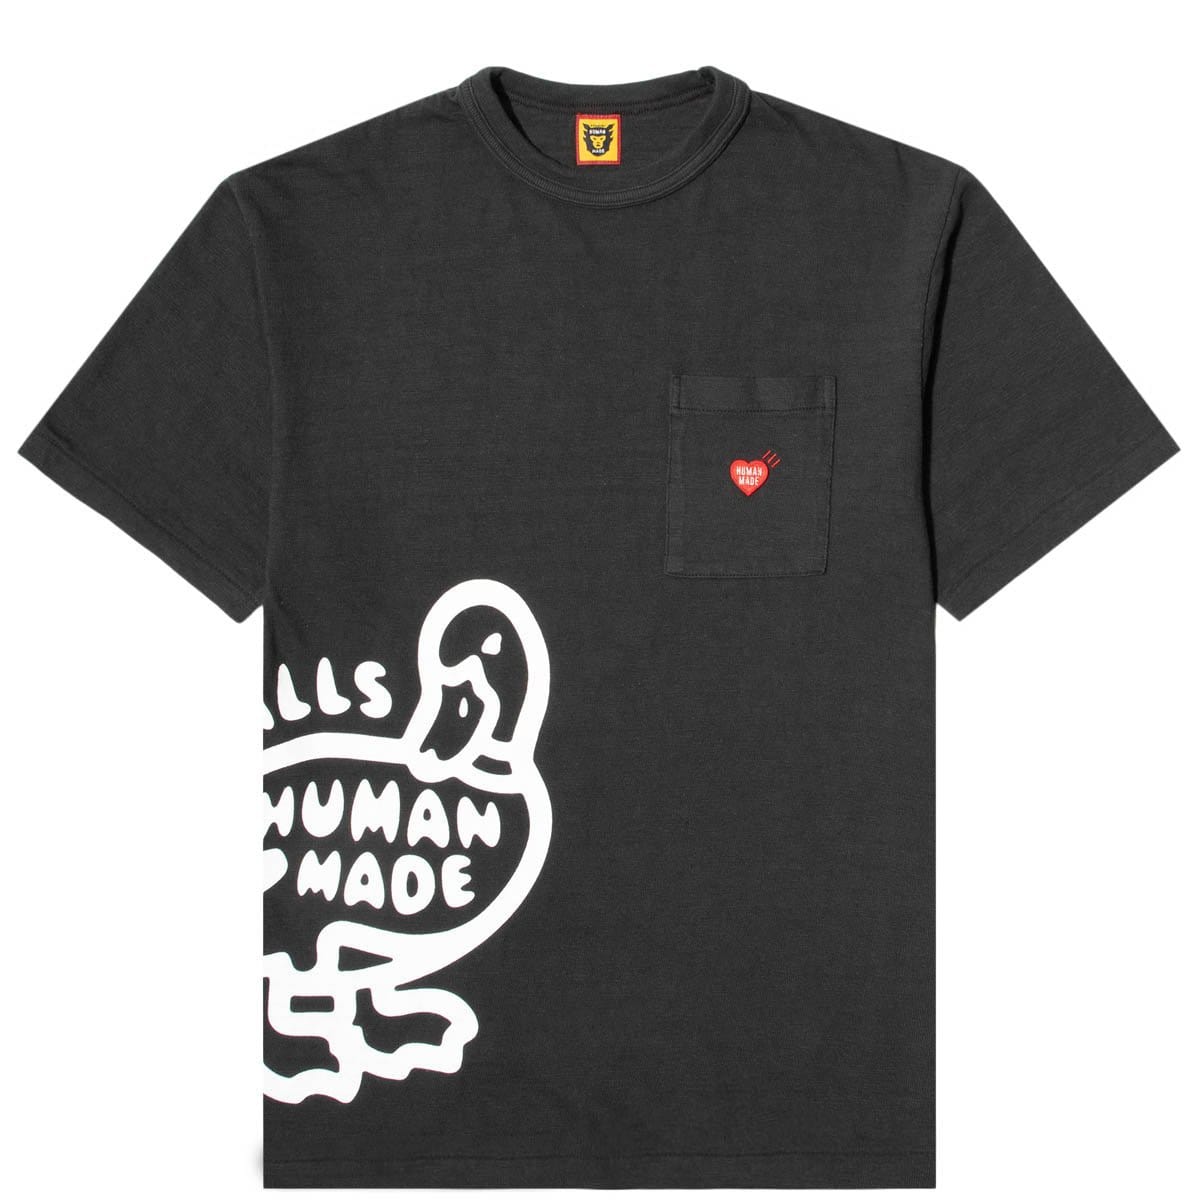 Human Made T-Shirts POCKET T-SHIRT #1